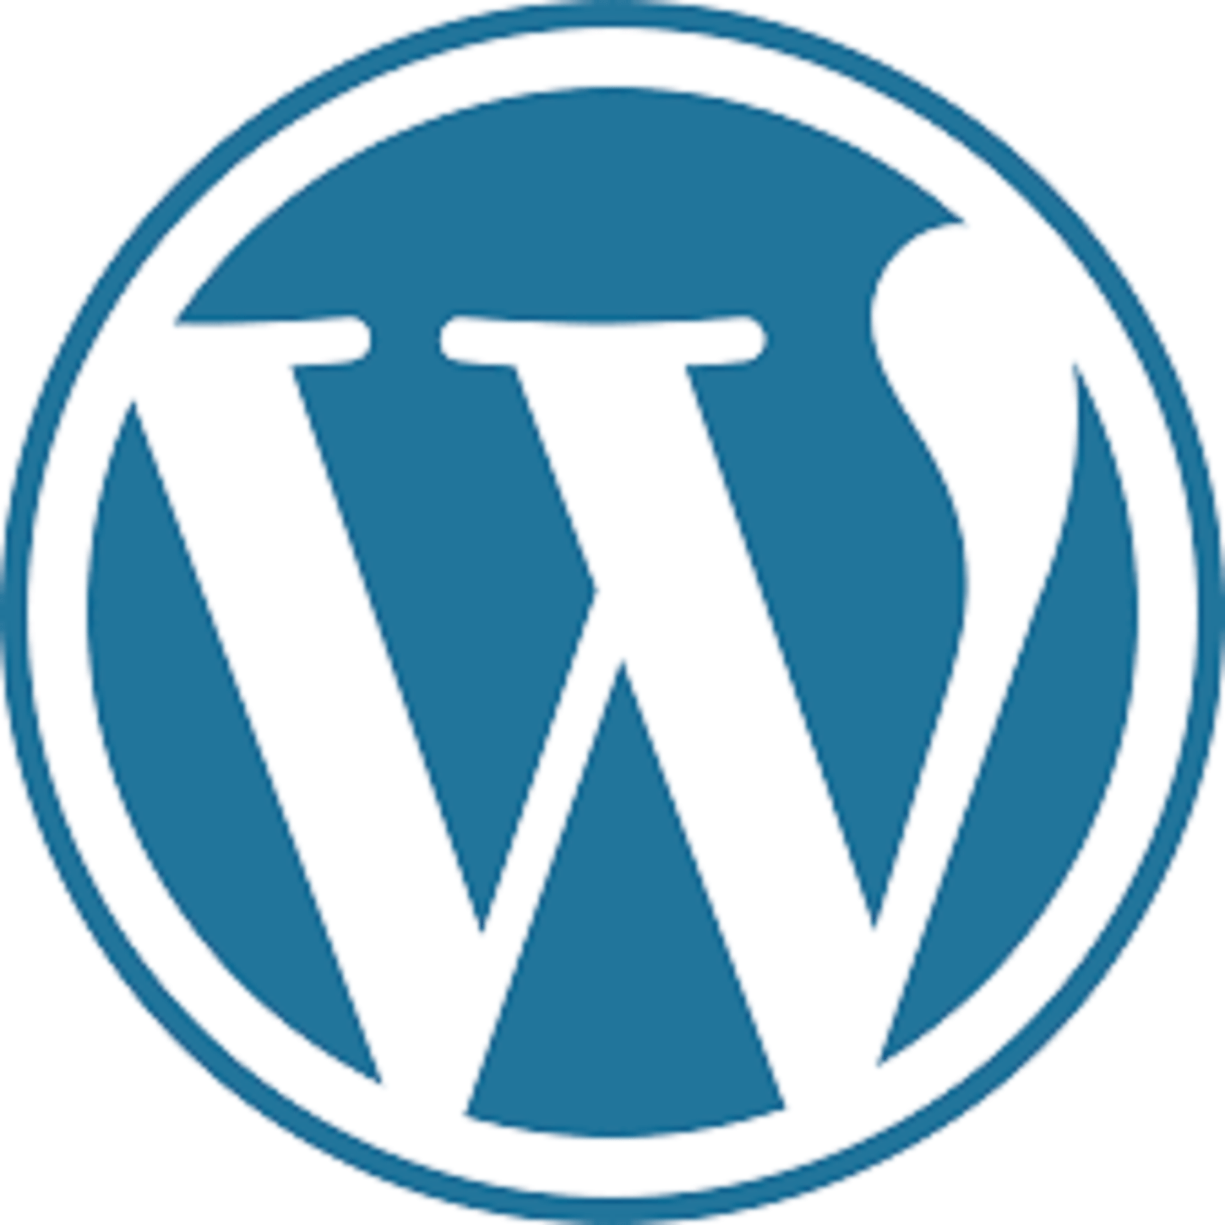 100% Free Wordpress Course